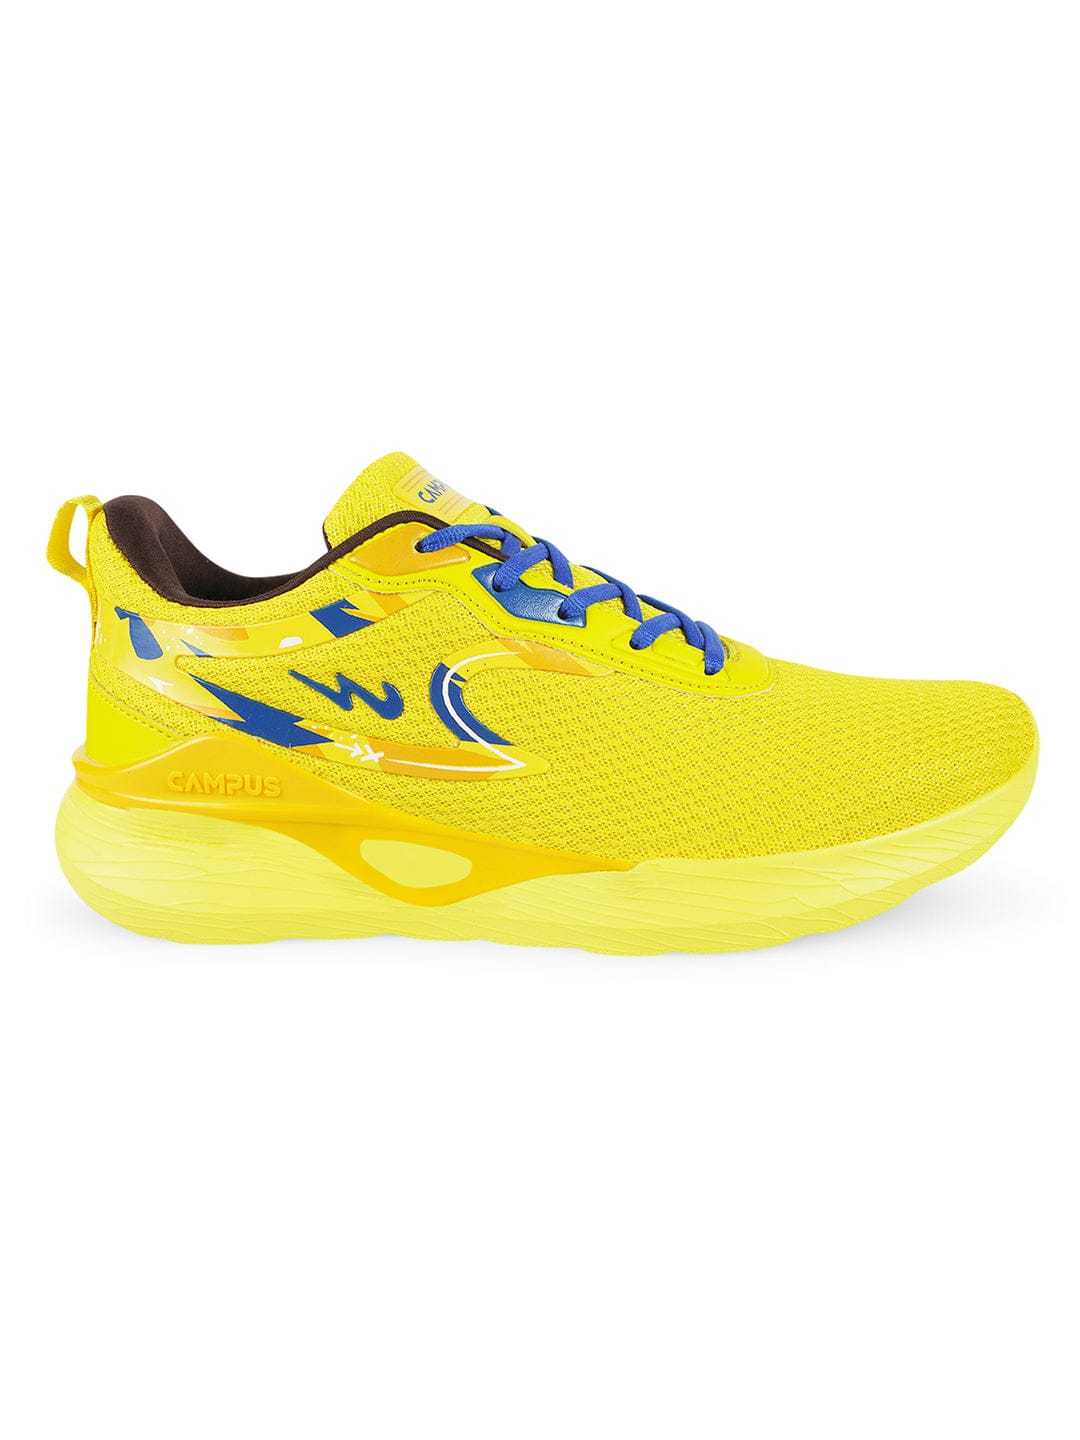 CAMP ZONE Yellow Men's Running Shoes